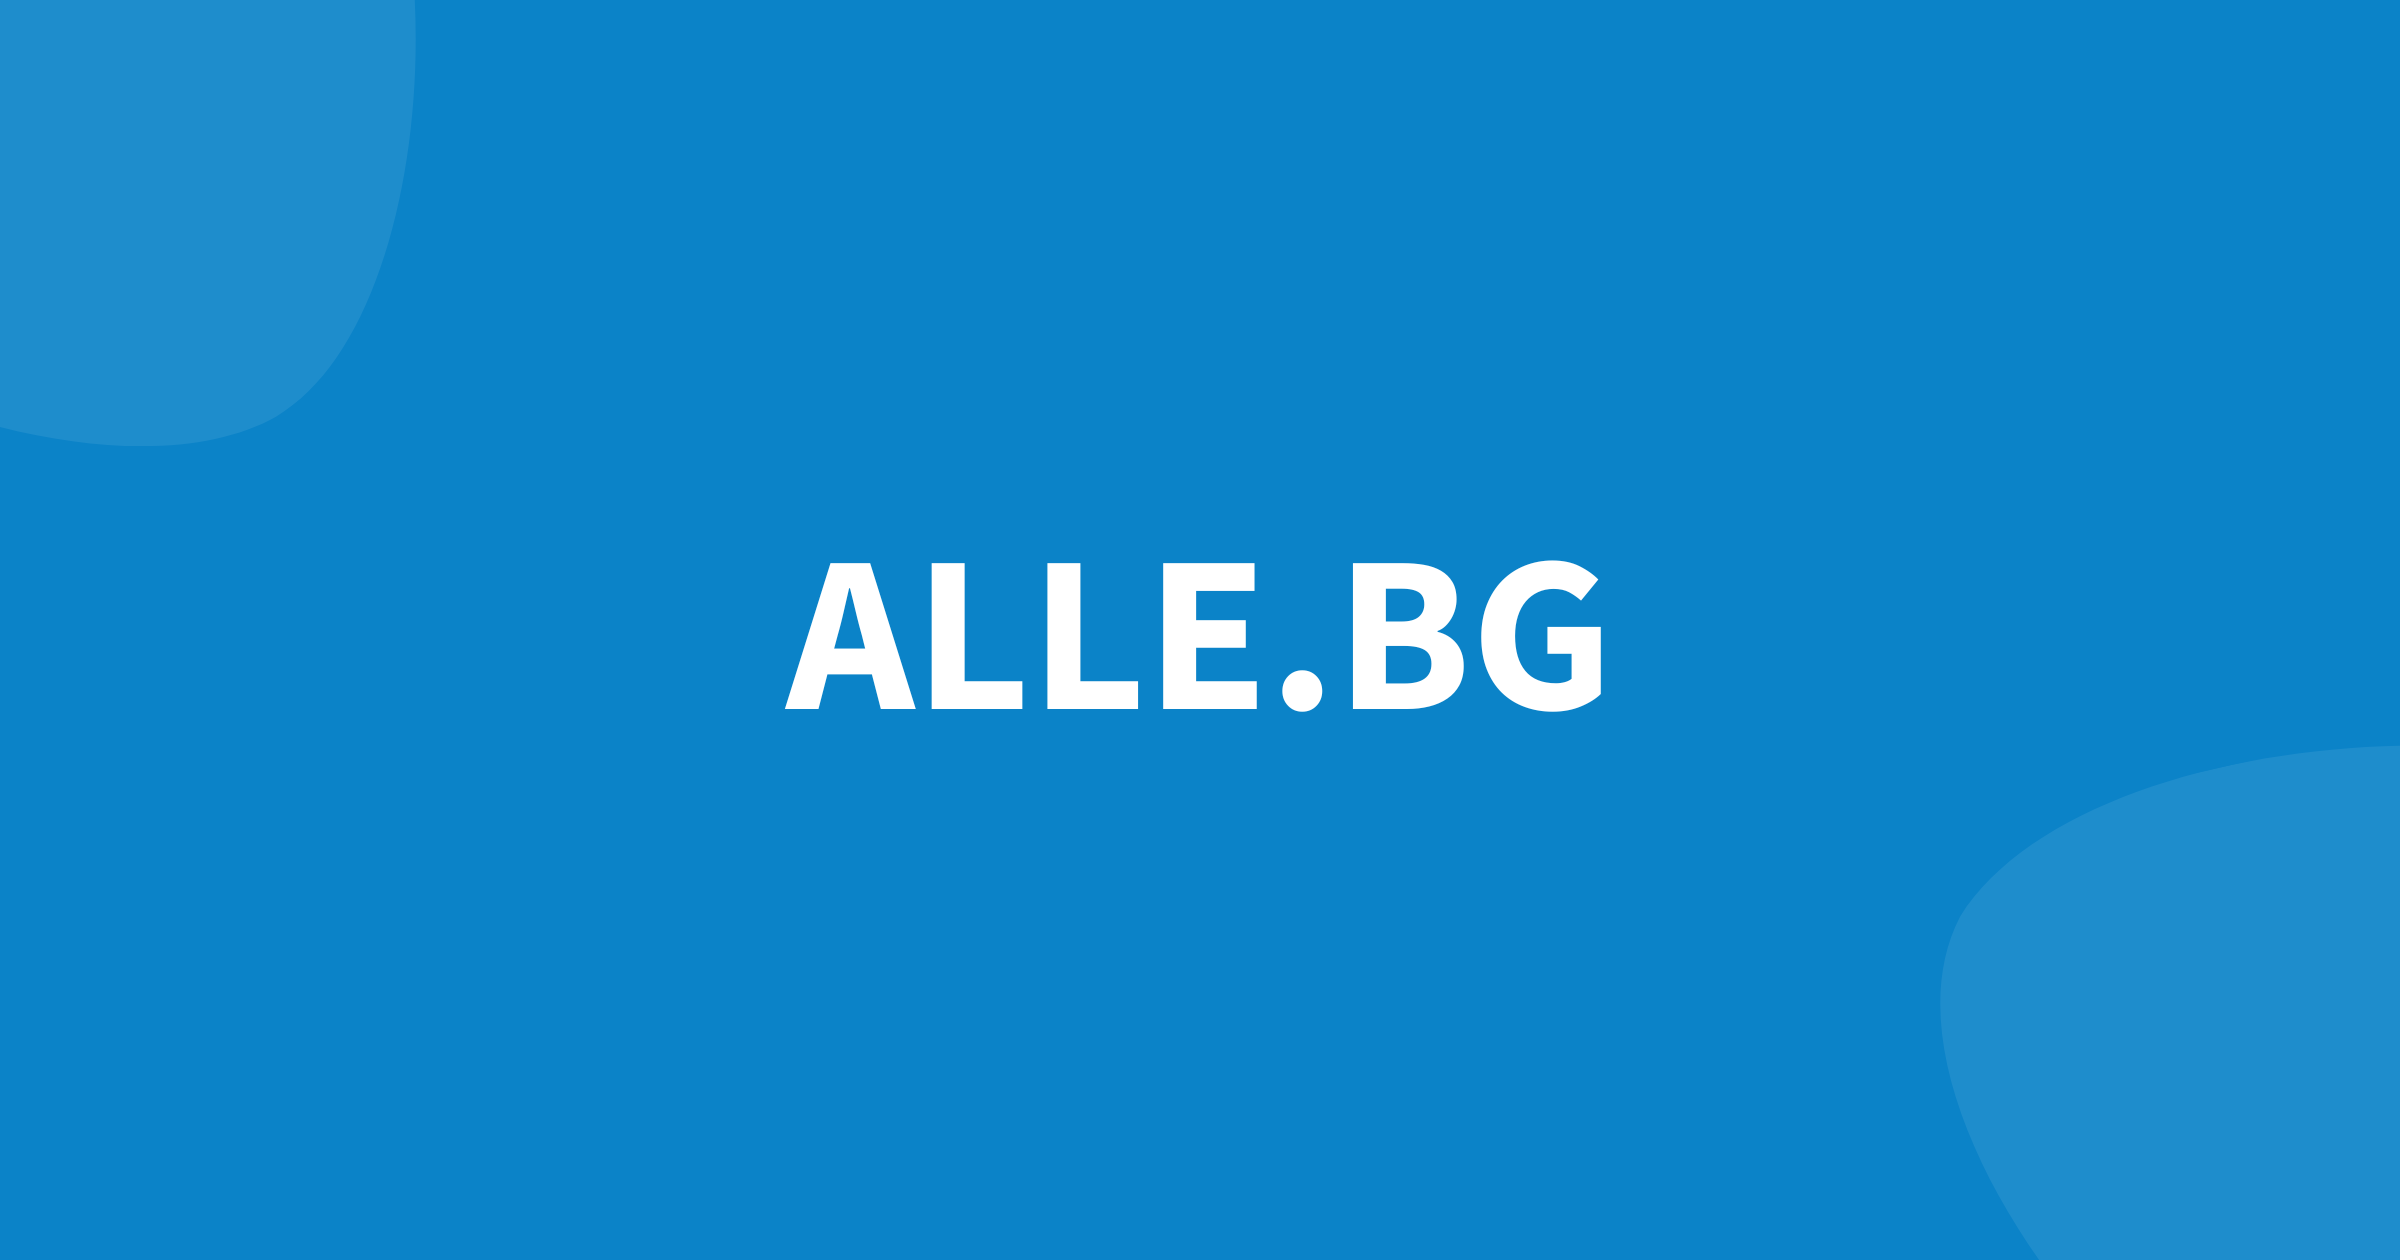 Alle.bg is a website builder service